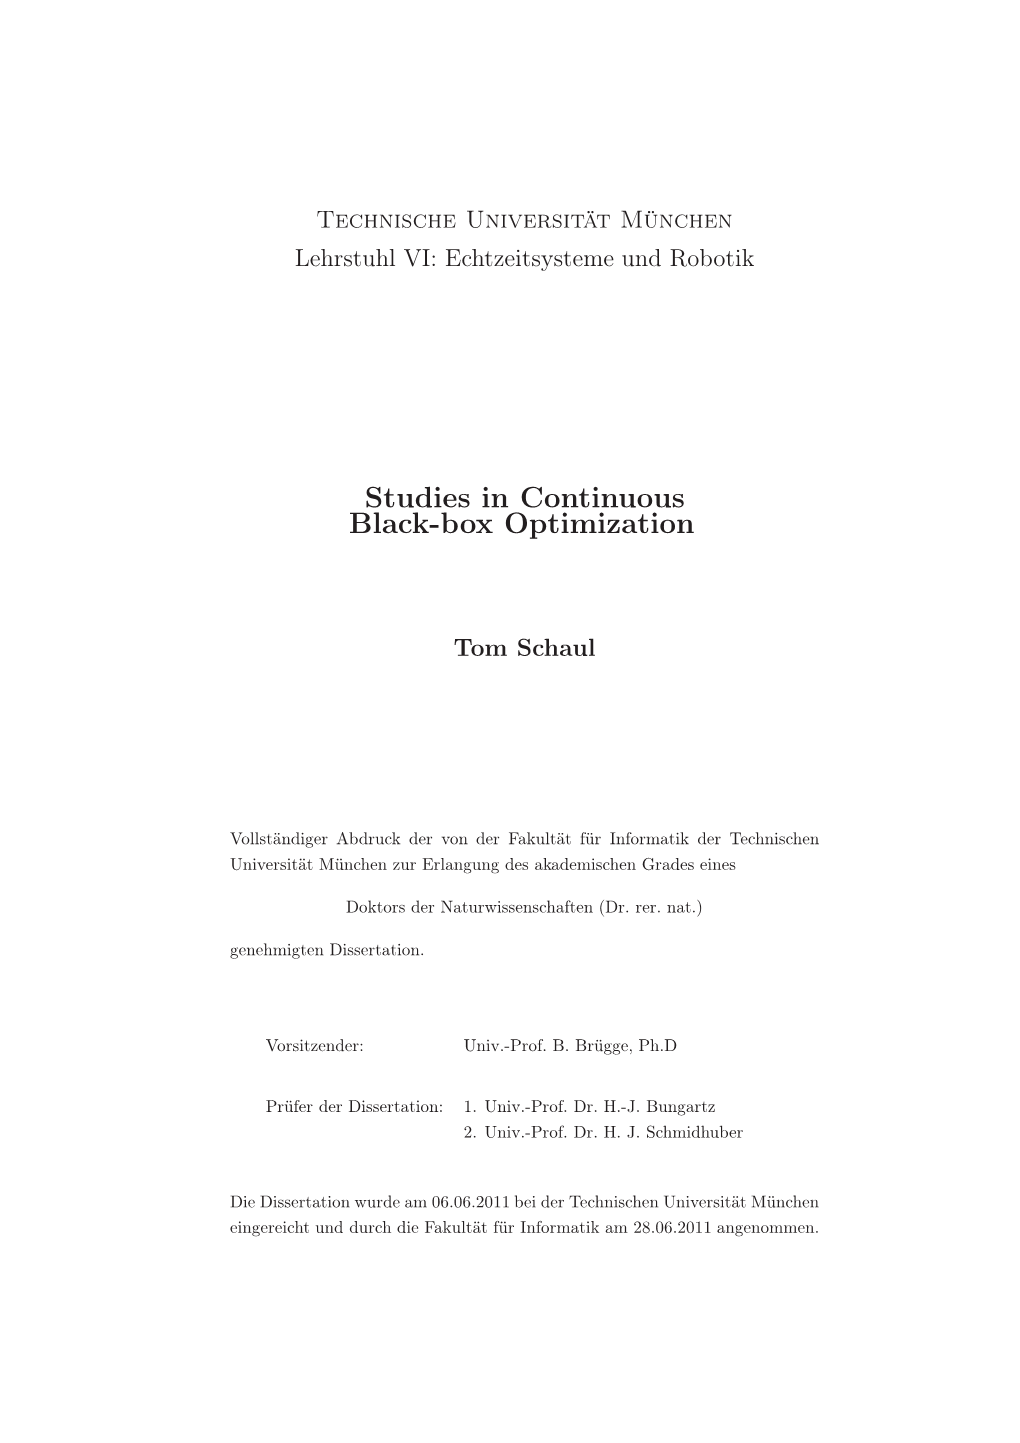 Studies in Continuous Black-Box Optimization